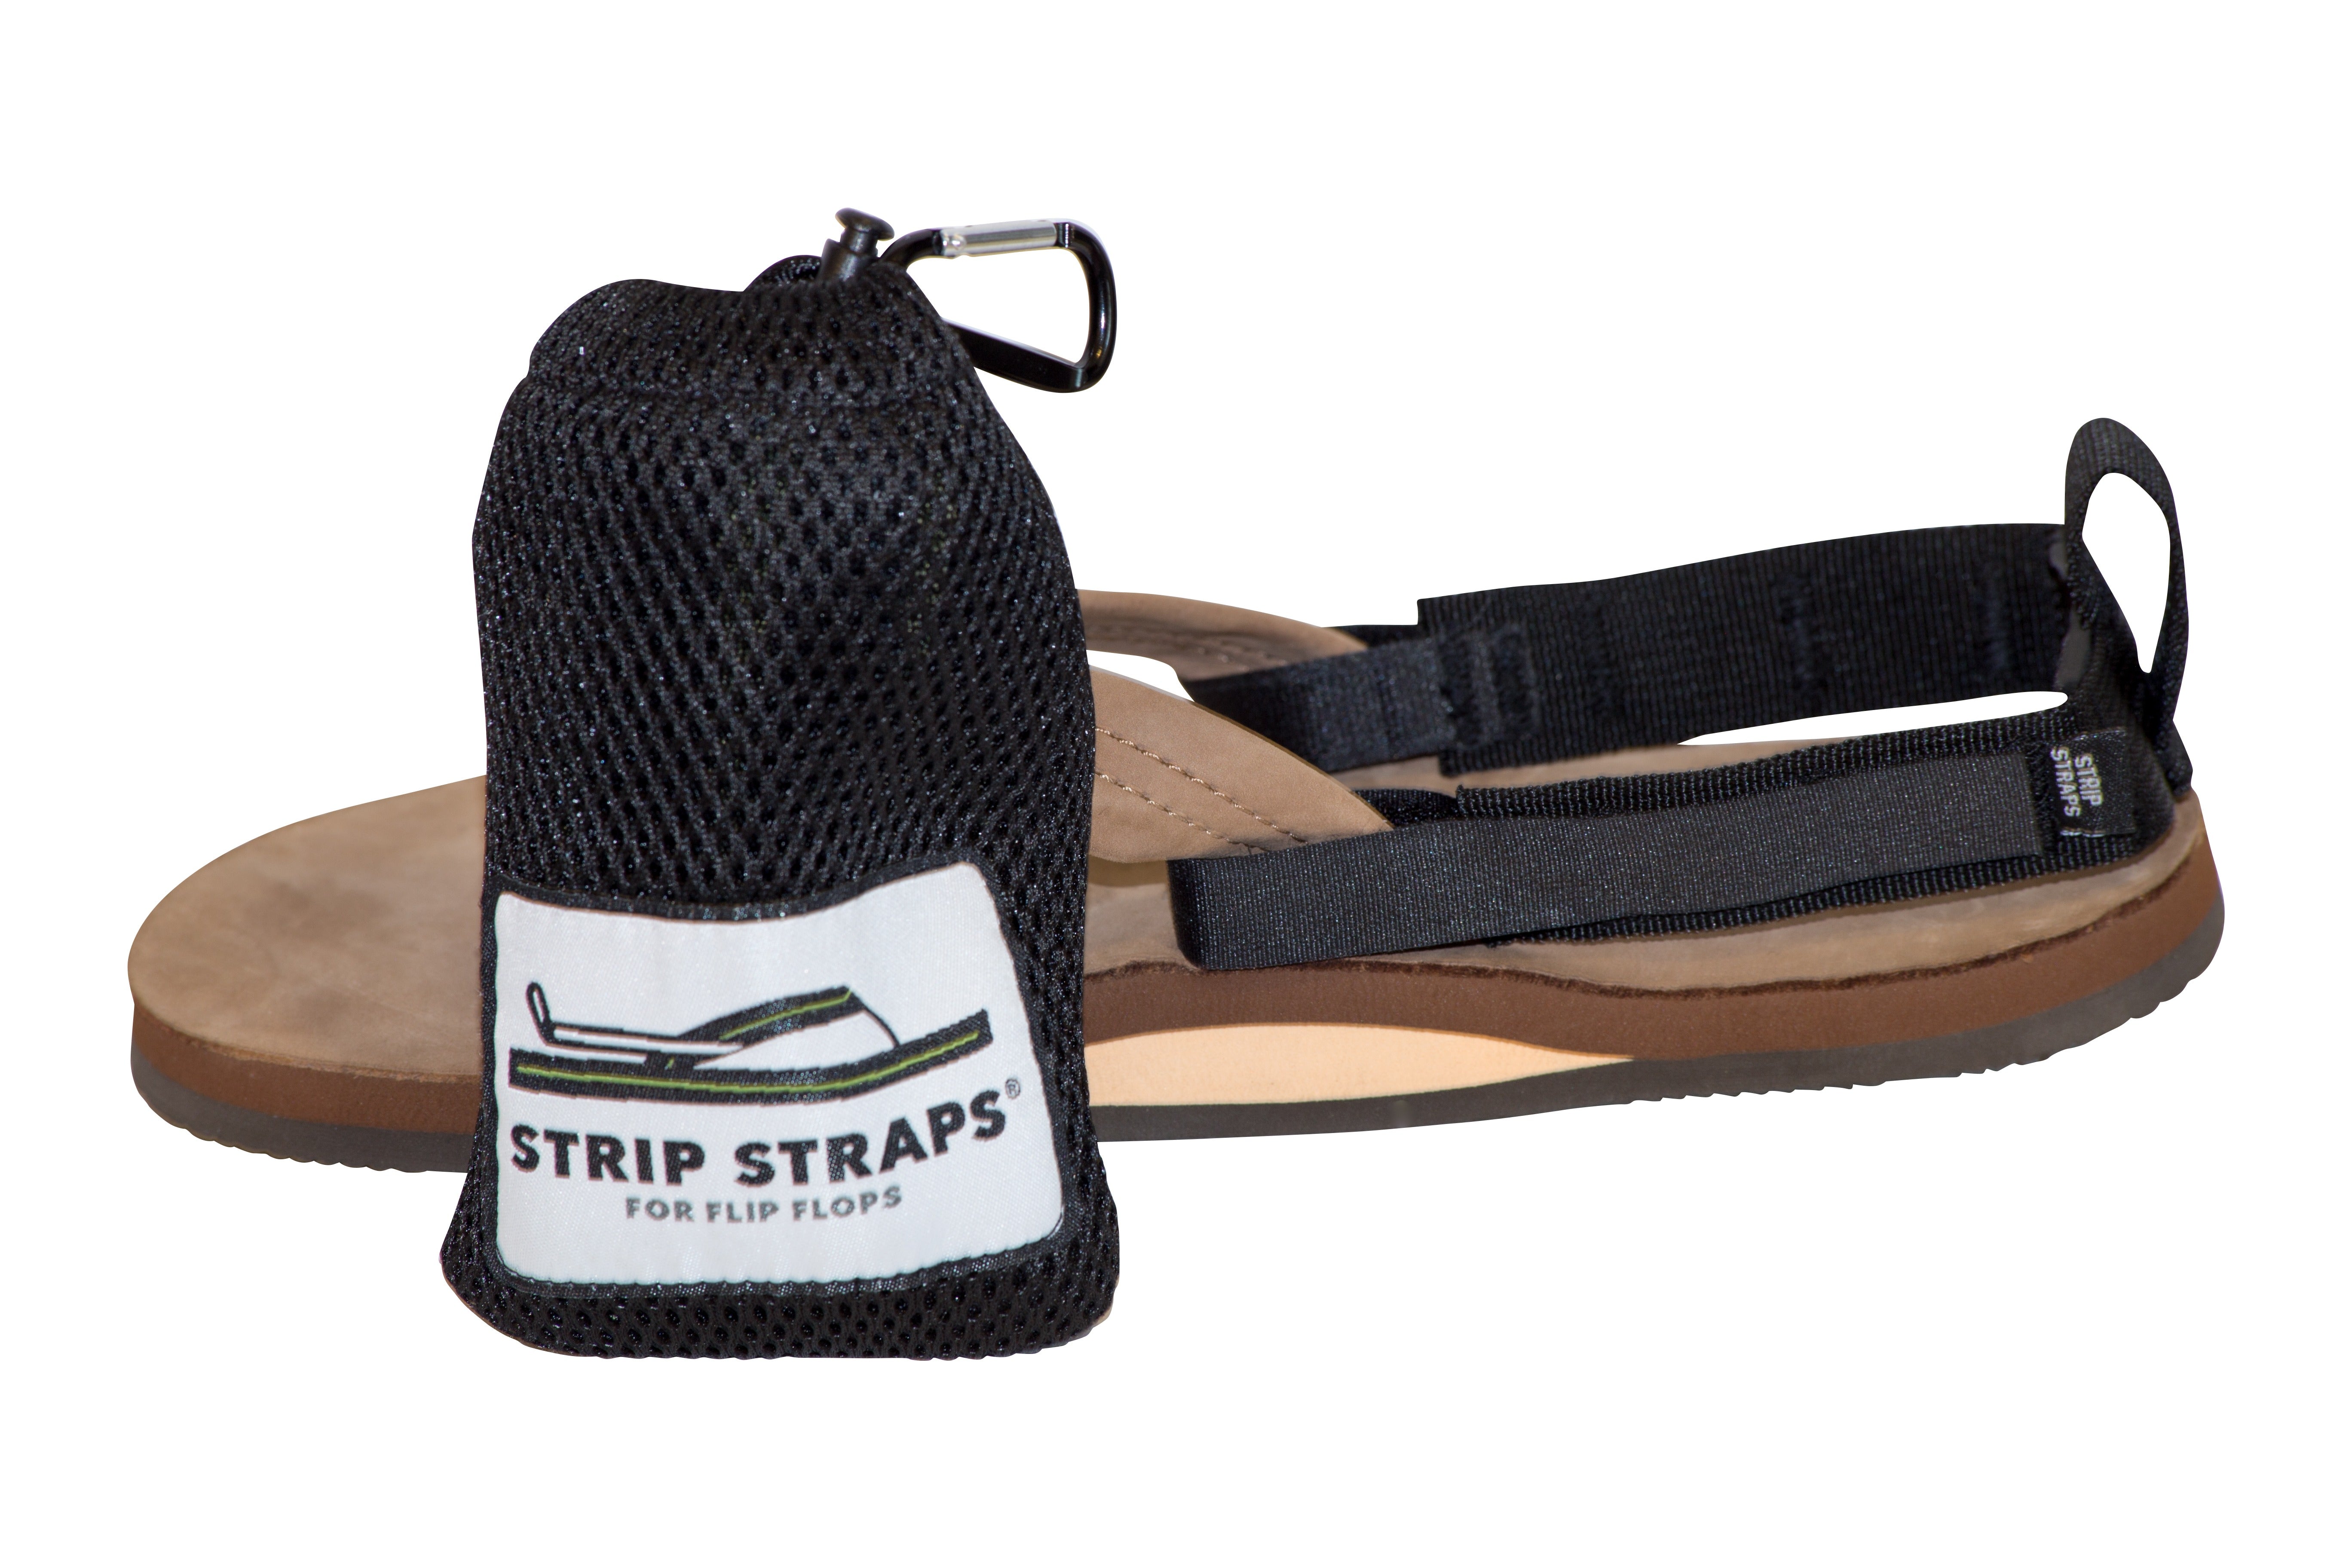 flip flops with strap in back